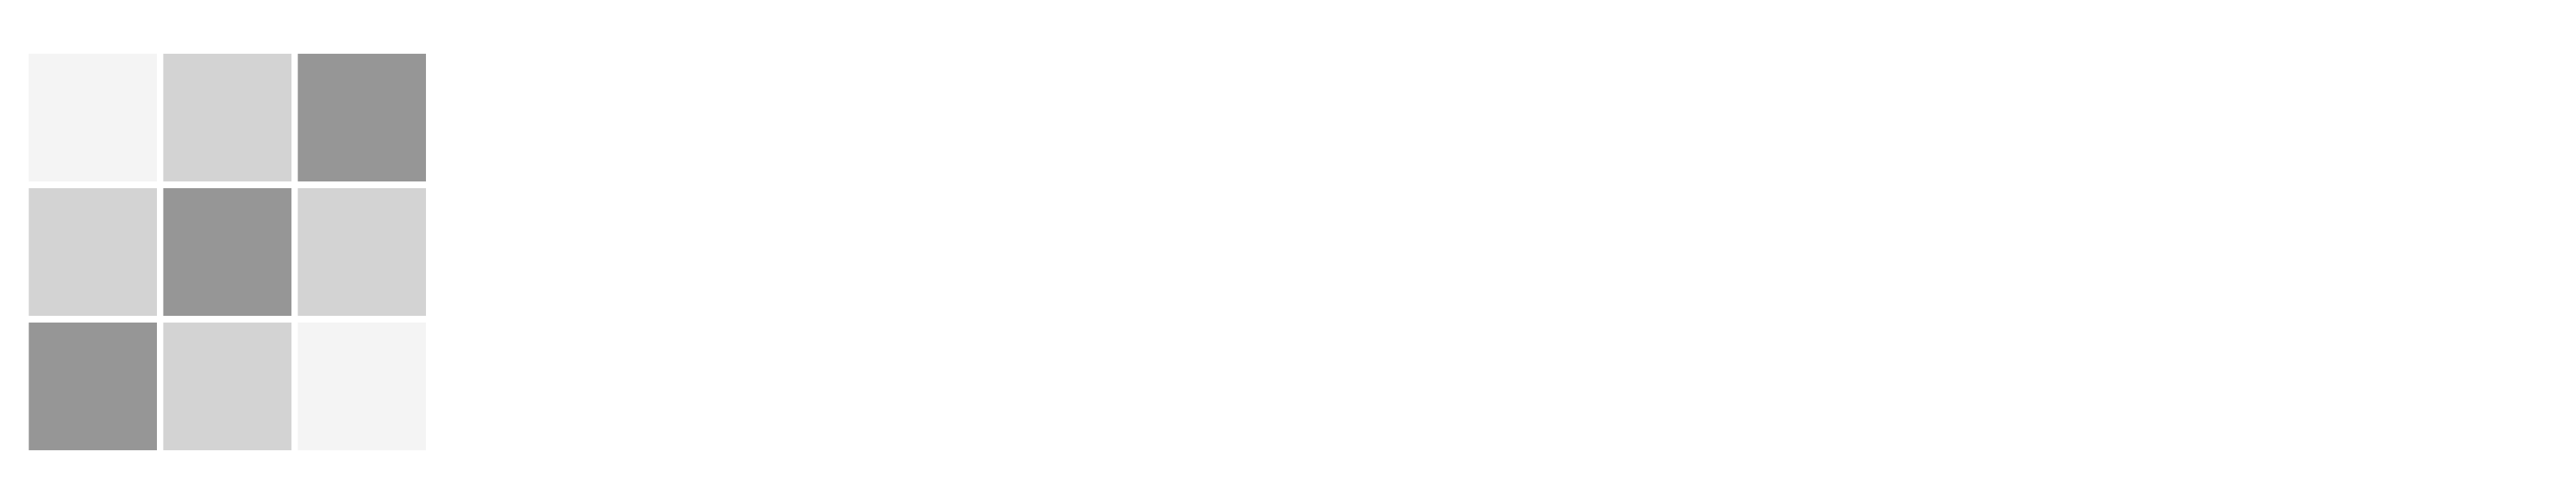 blockchaintest logo